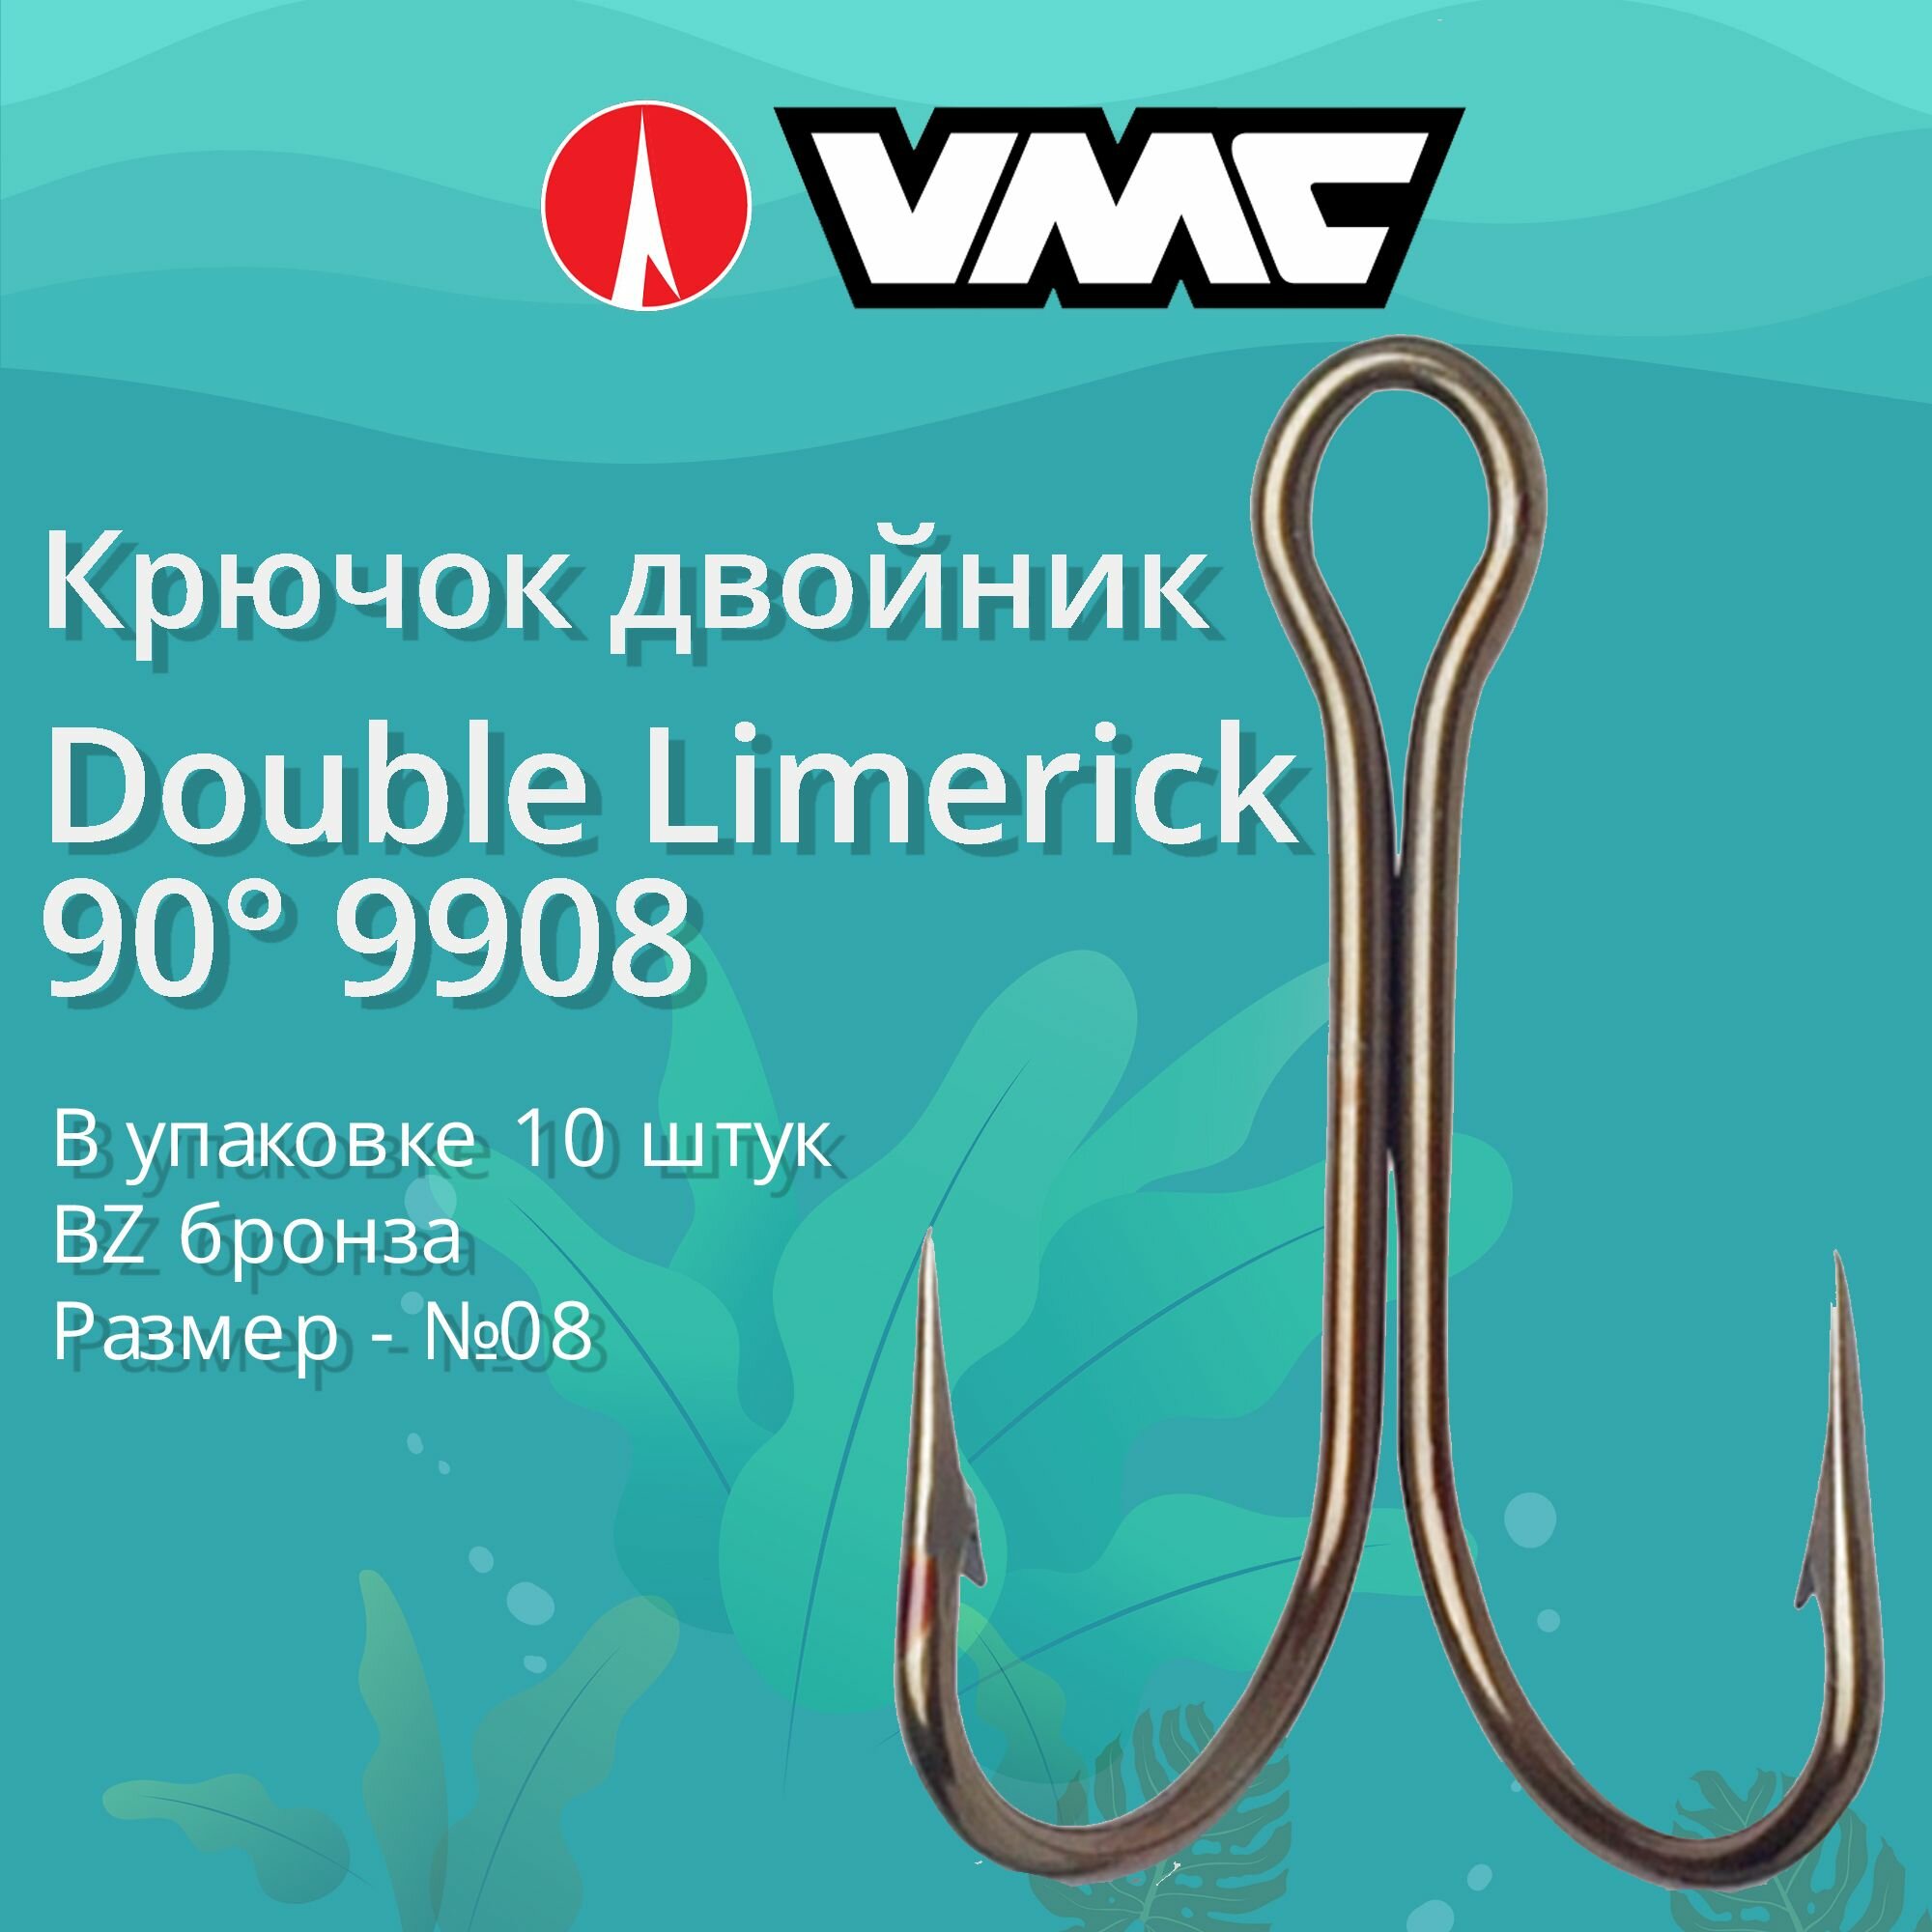 Крючки для рыбалки (двойник) VMC Double Limerick 9908 BZ (бронза) №08 (упаковка 10 штук)